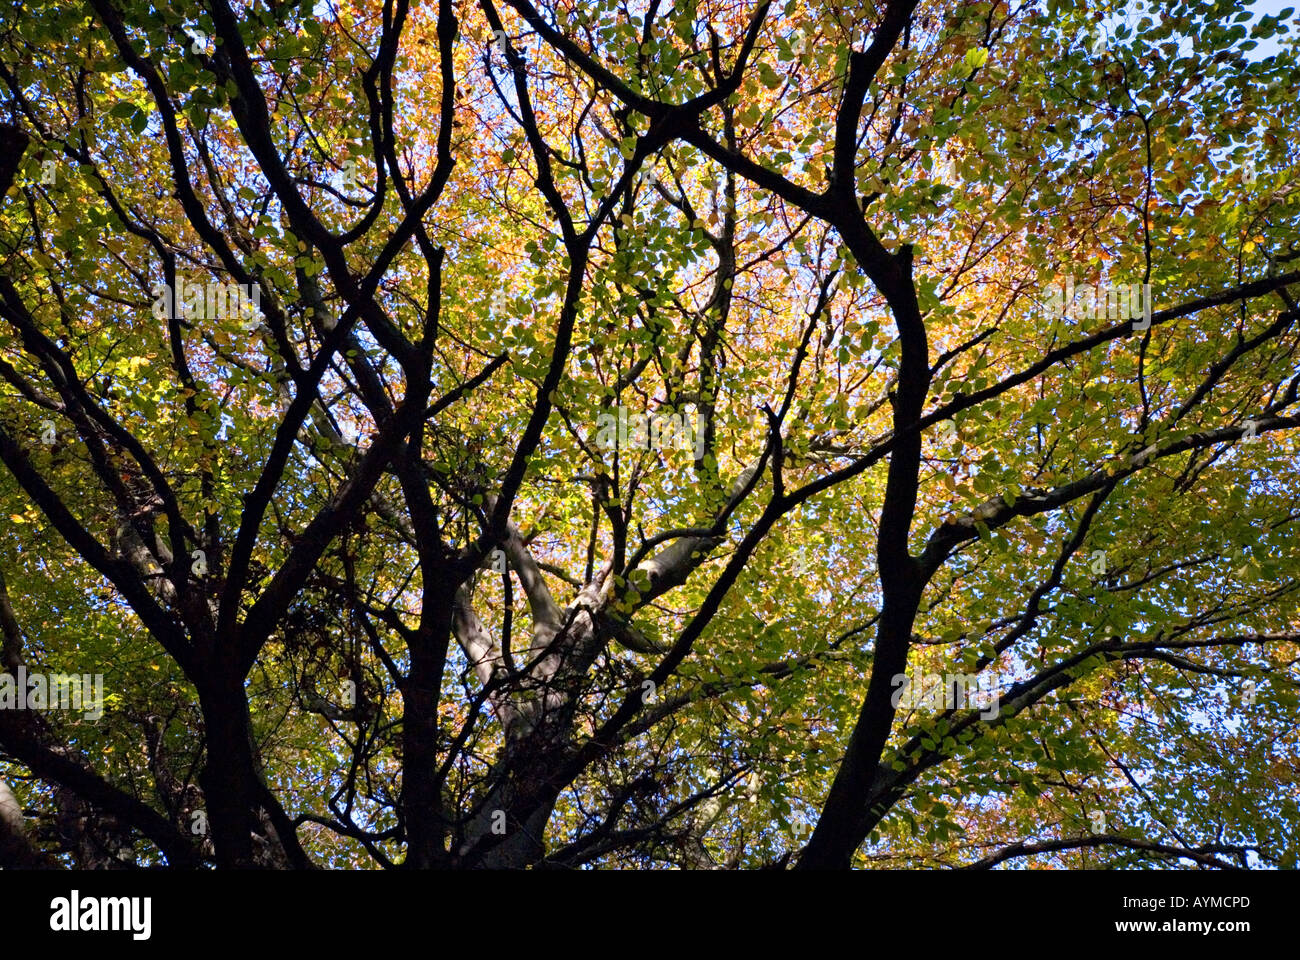 A majestic tree supporting autumn foliage Stock Photo